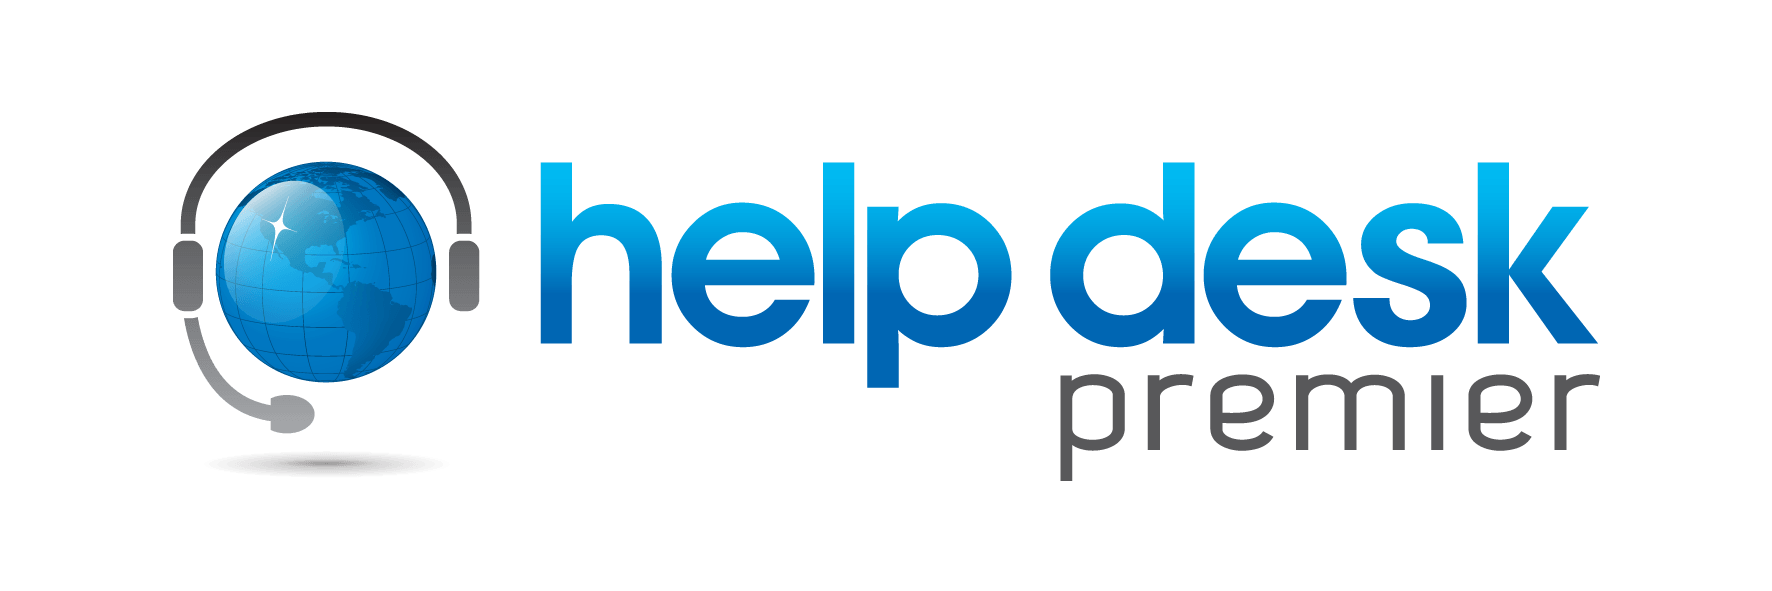 Help Desk Logo - BrightBox Solutions, Creators of Help Desk Premier, Secures $000